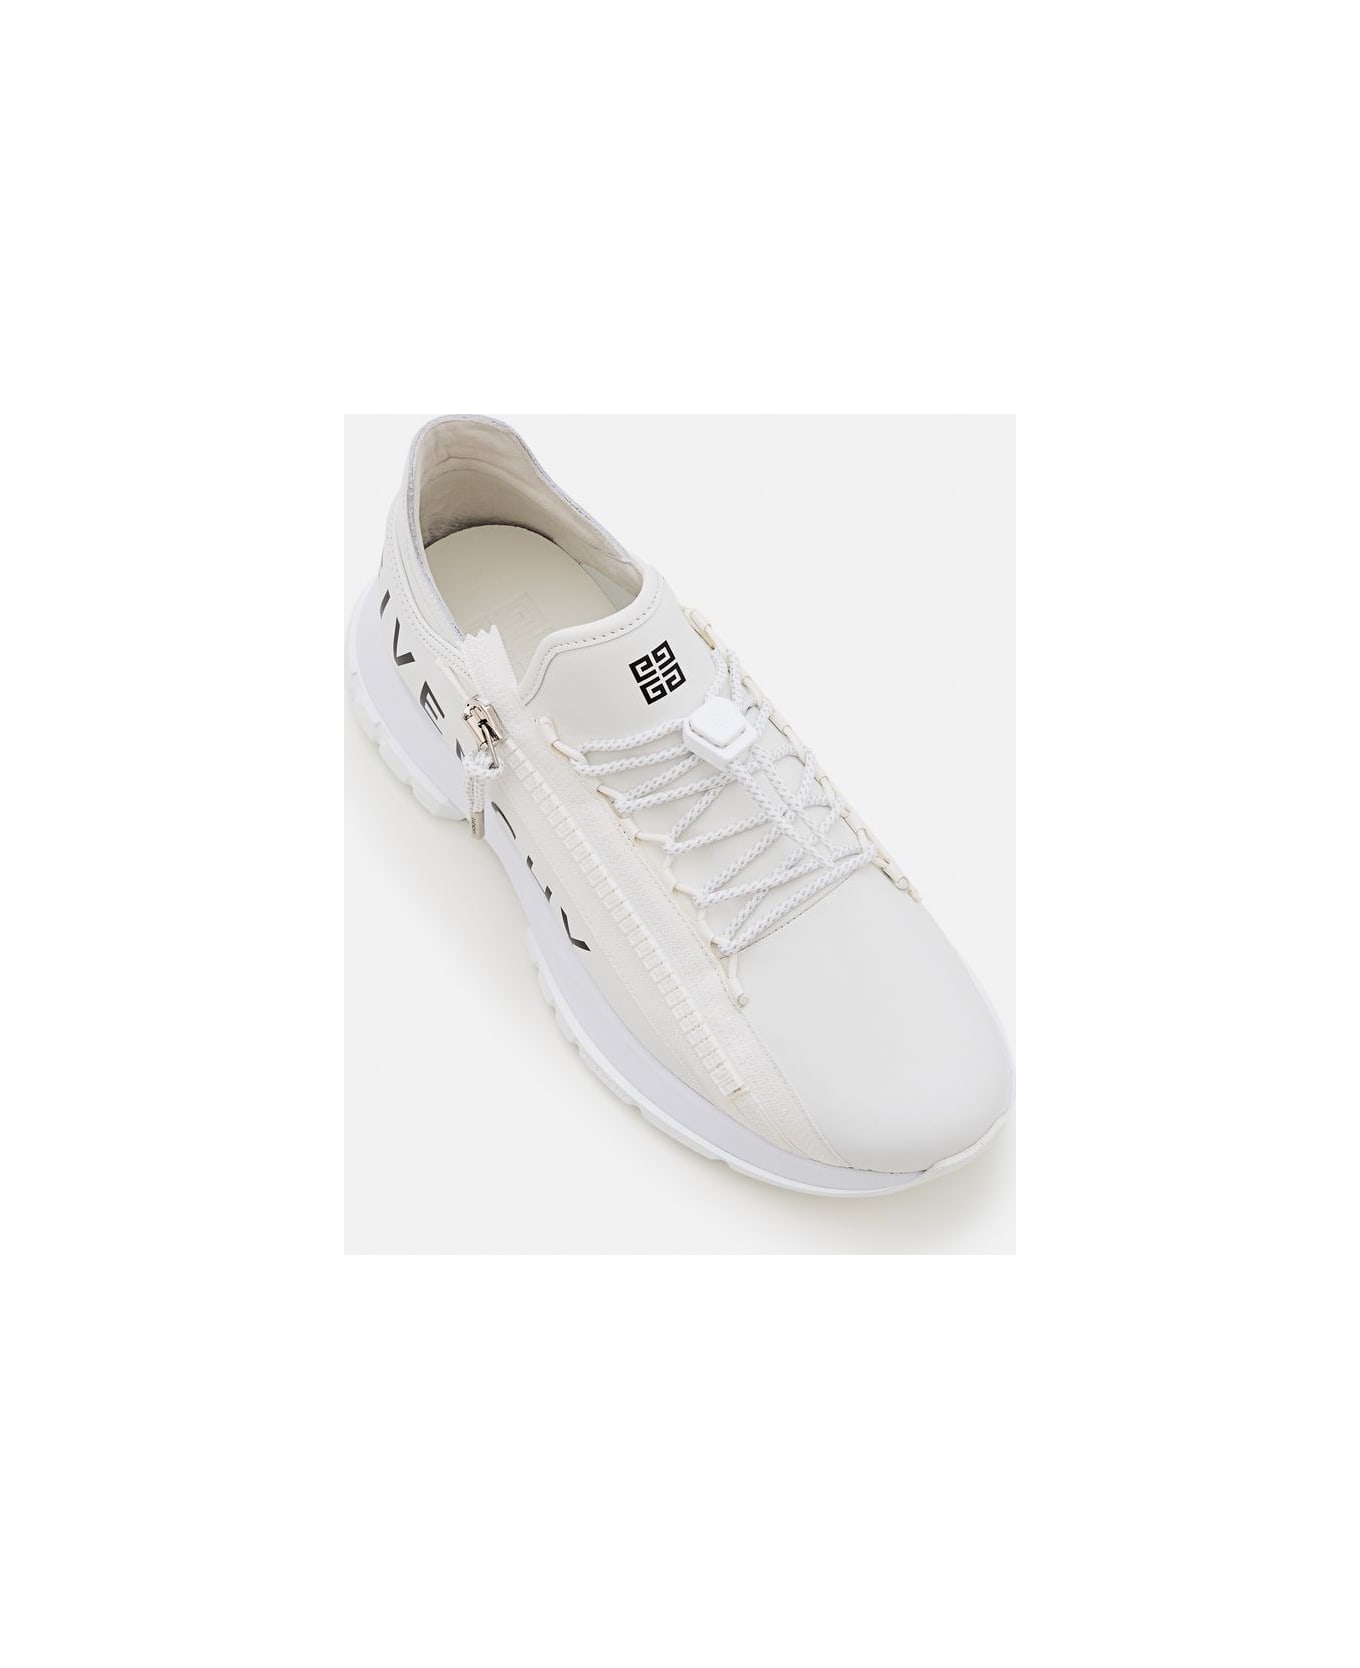 Givenchy Spectre Zip Sneaker - White スニーカー